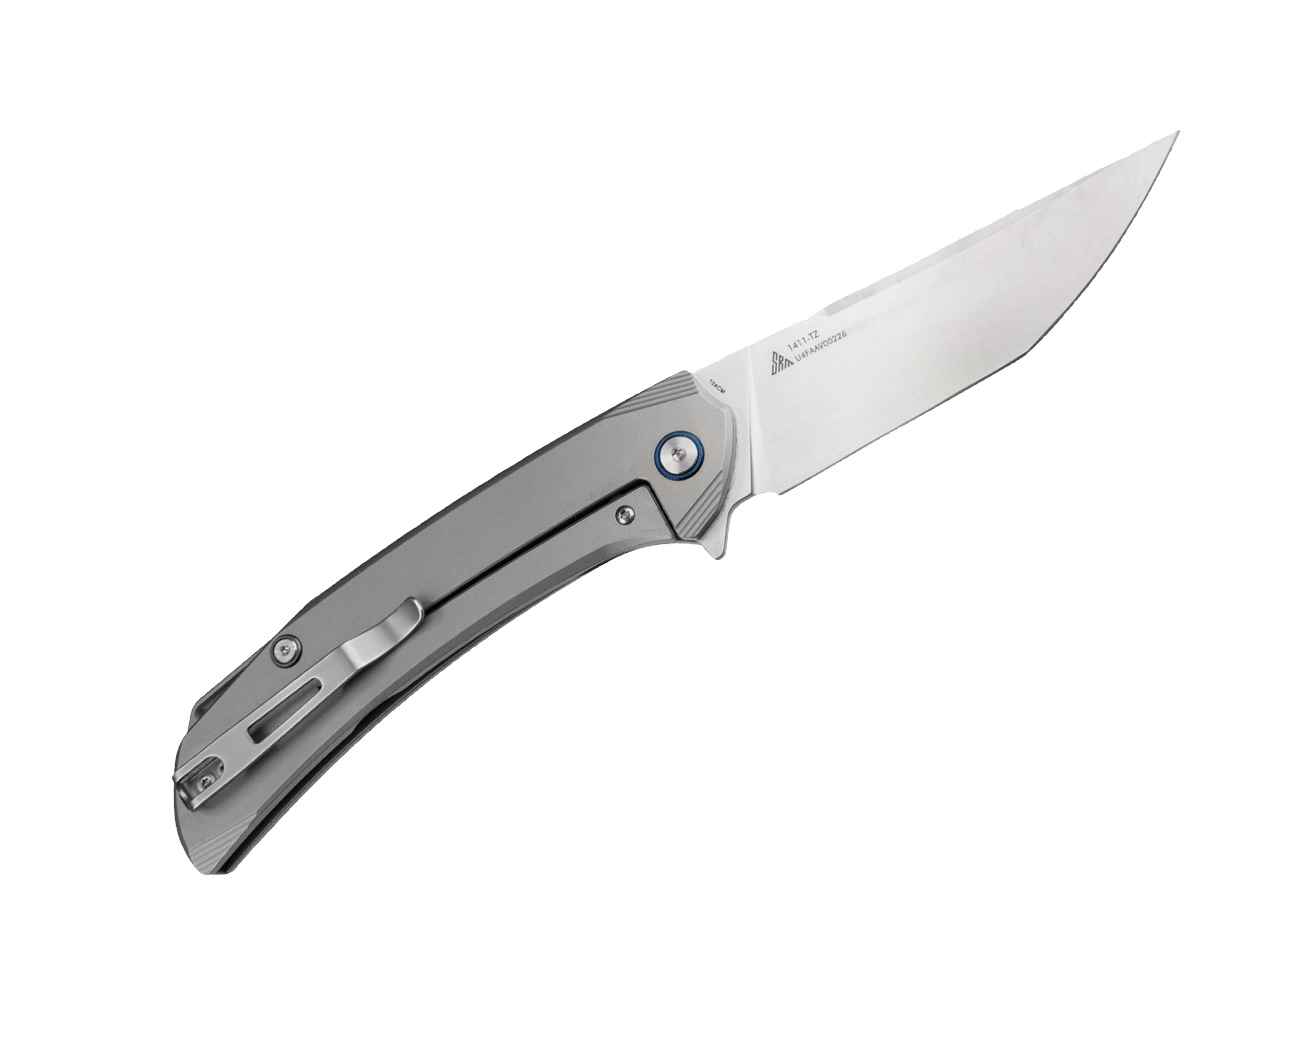 Нож SRM 1411-TZ сталь 154CM рукоять TC4 Titanium - фото 1